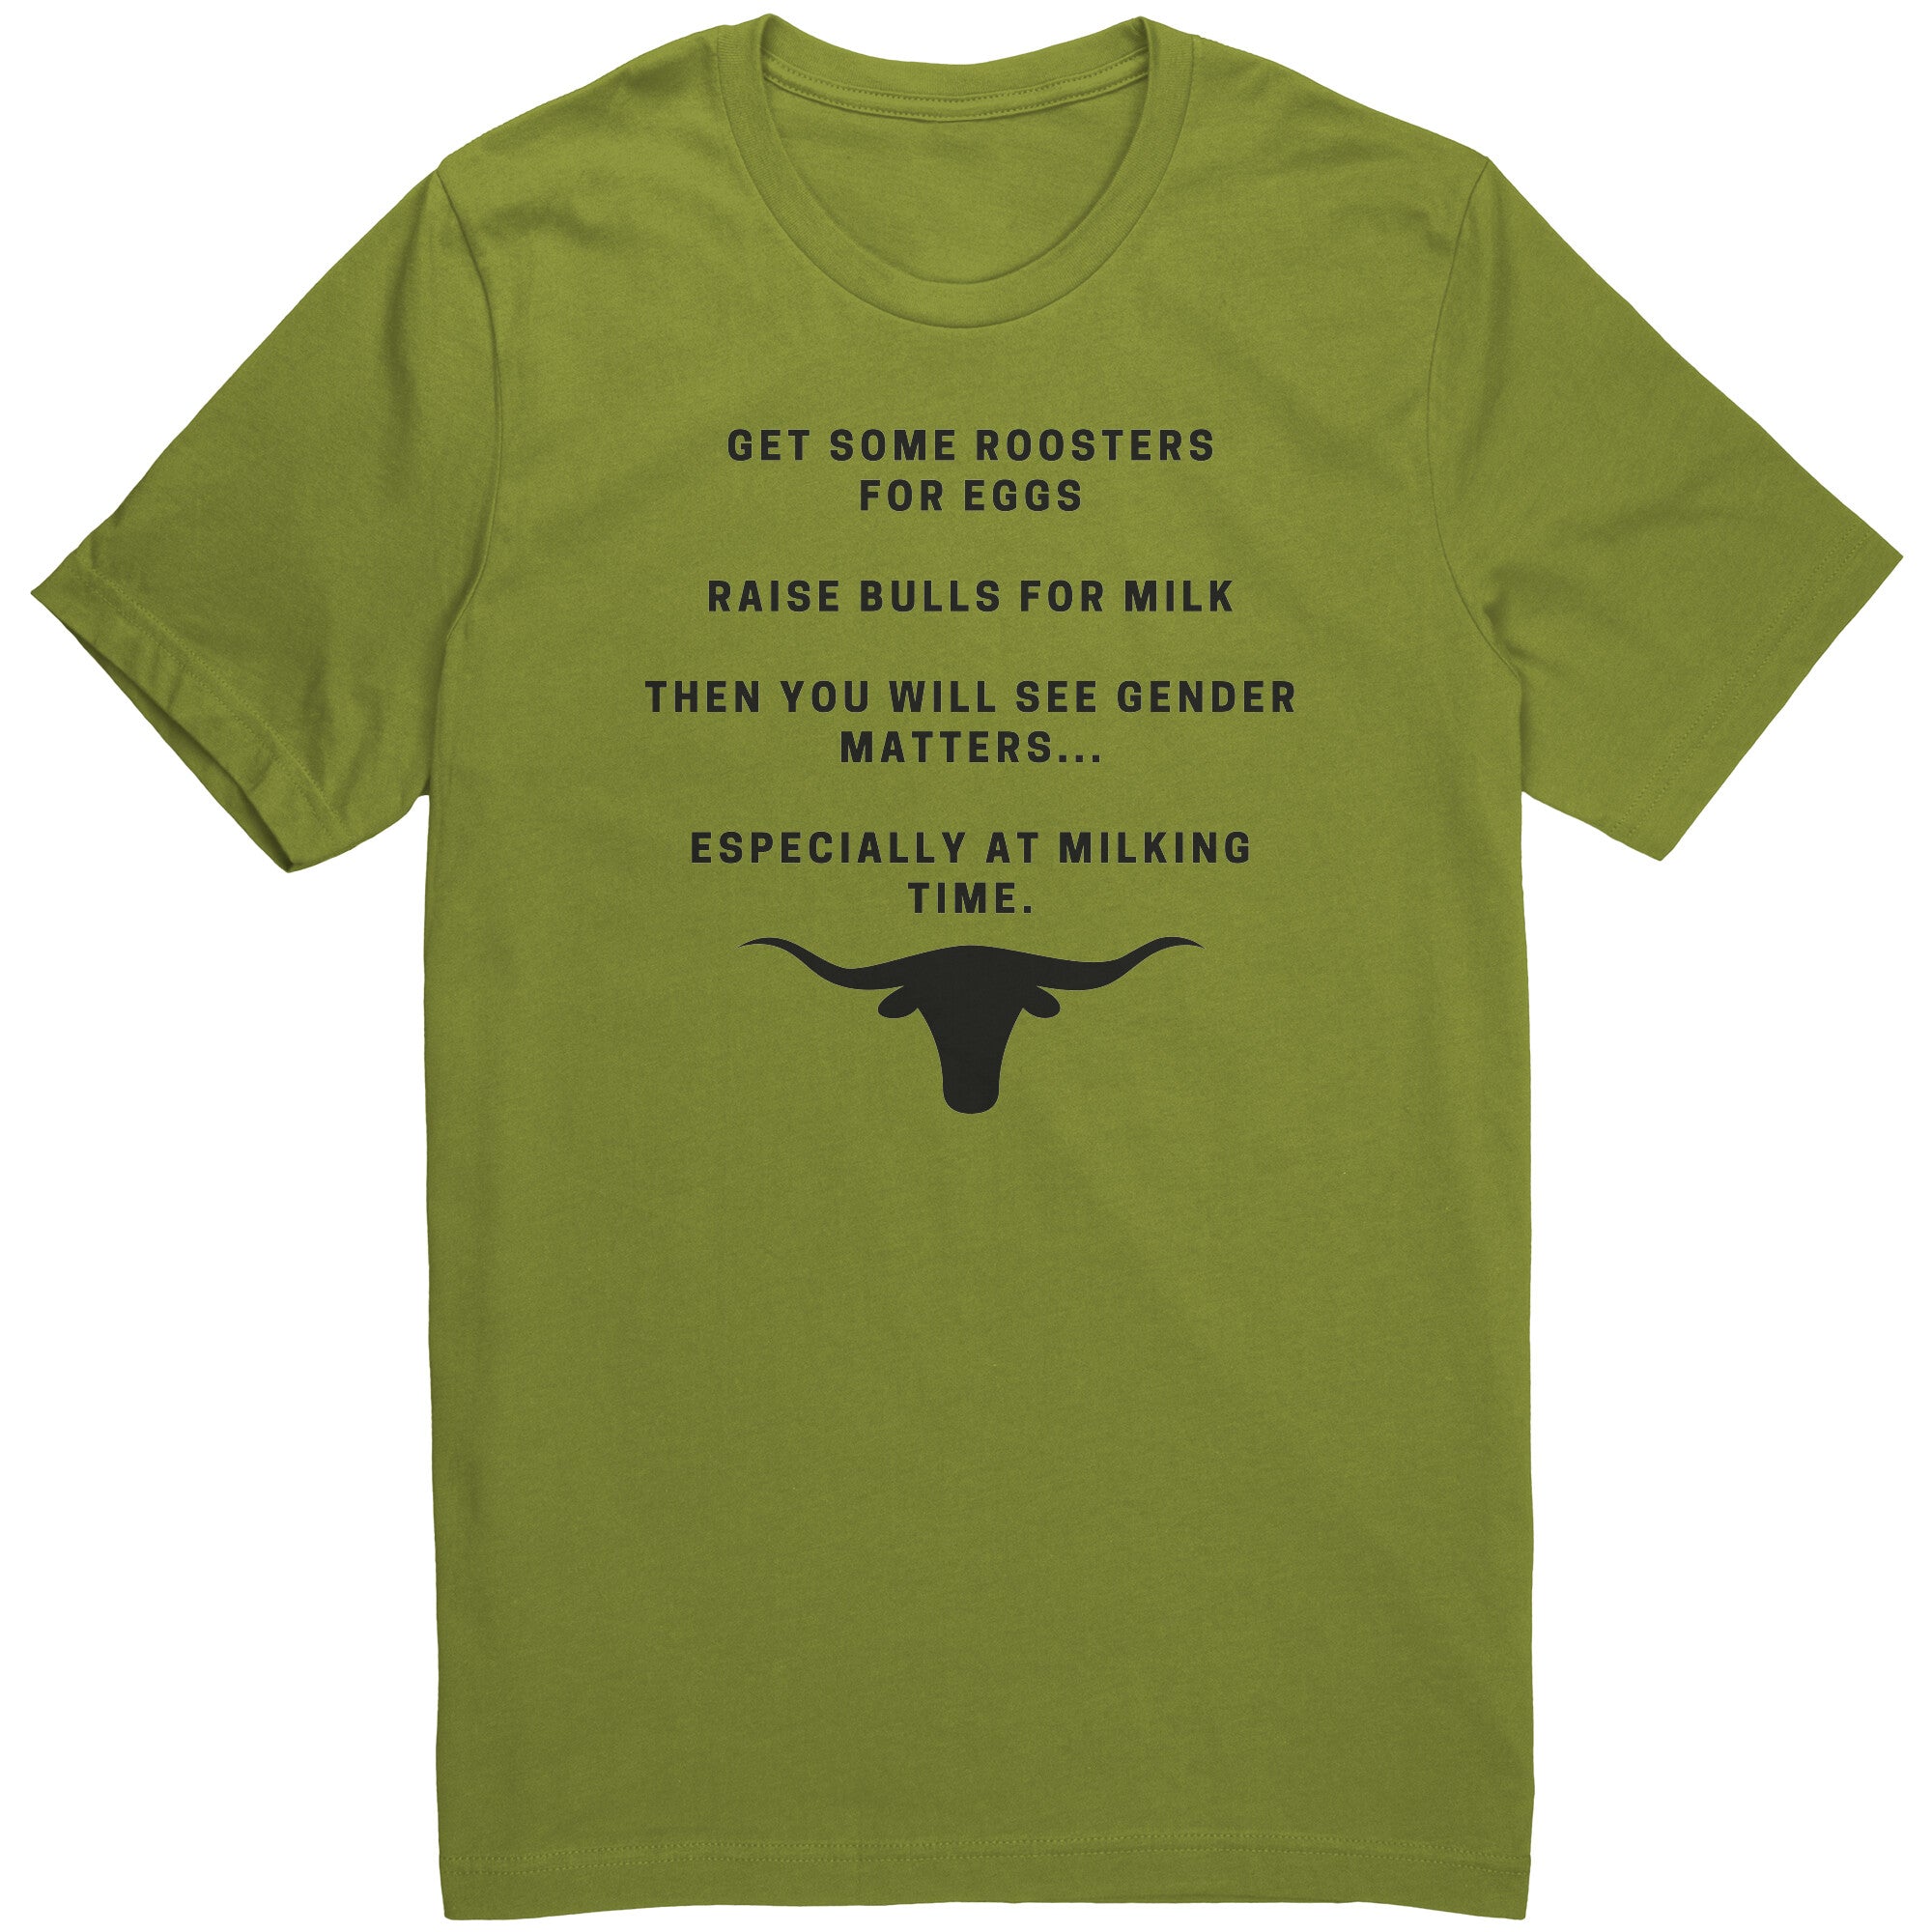 Funny Mens Shirt, Sarcastic Shirt For Men, Novelty Shirts, Offensive Shirt Milk A Bull Gender Matters Unisex Tee green